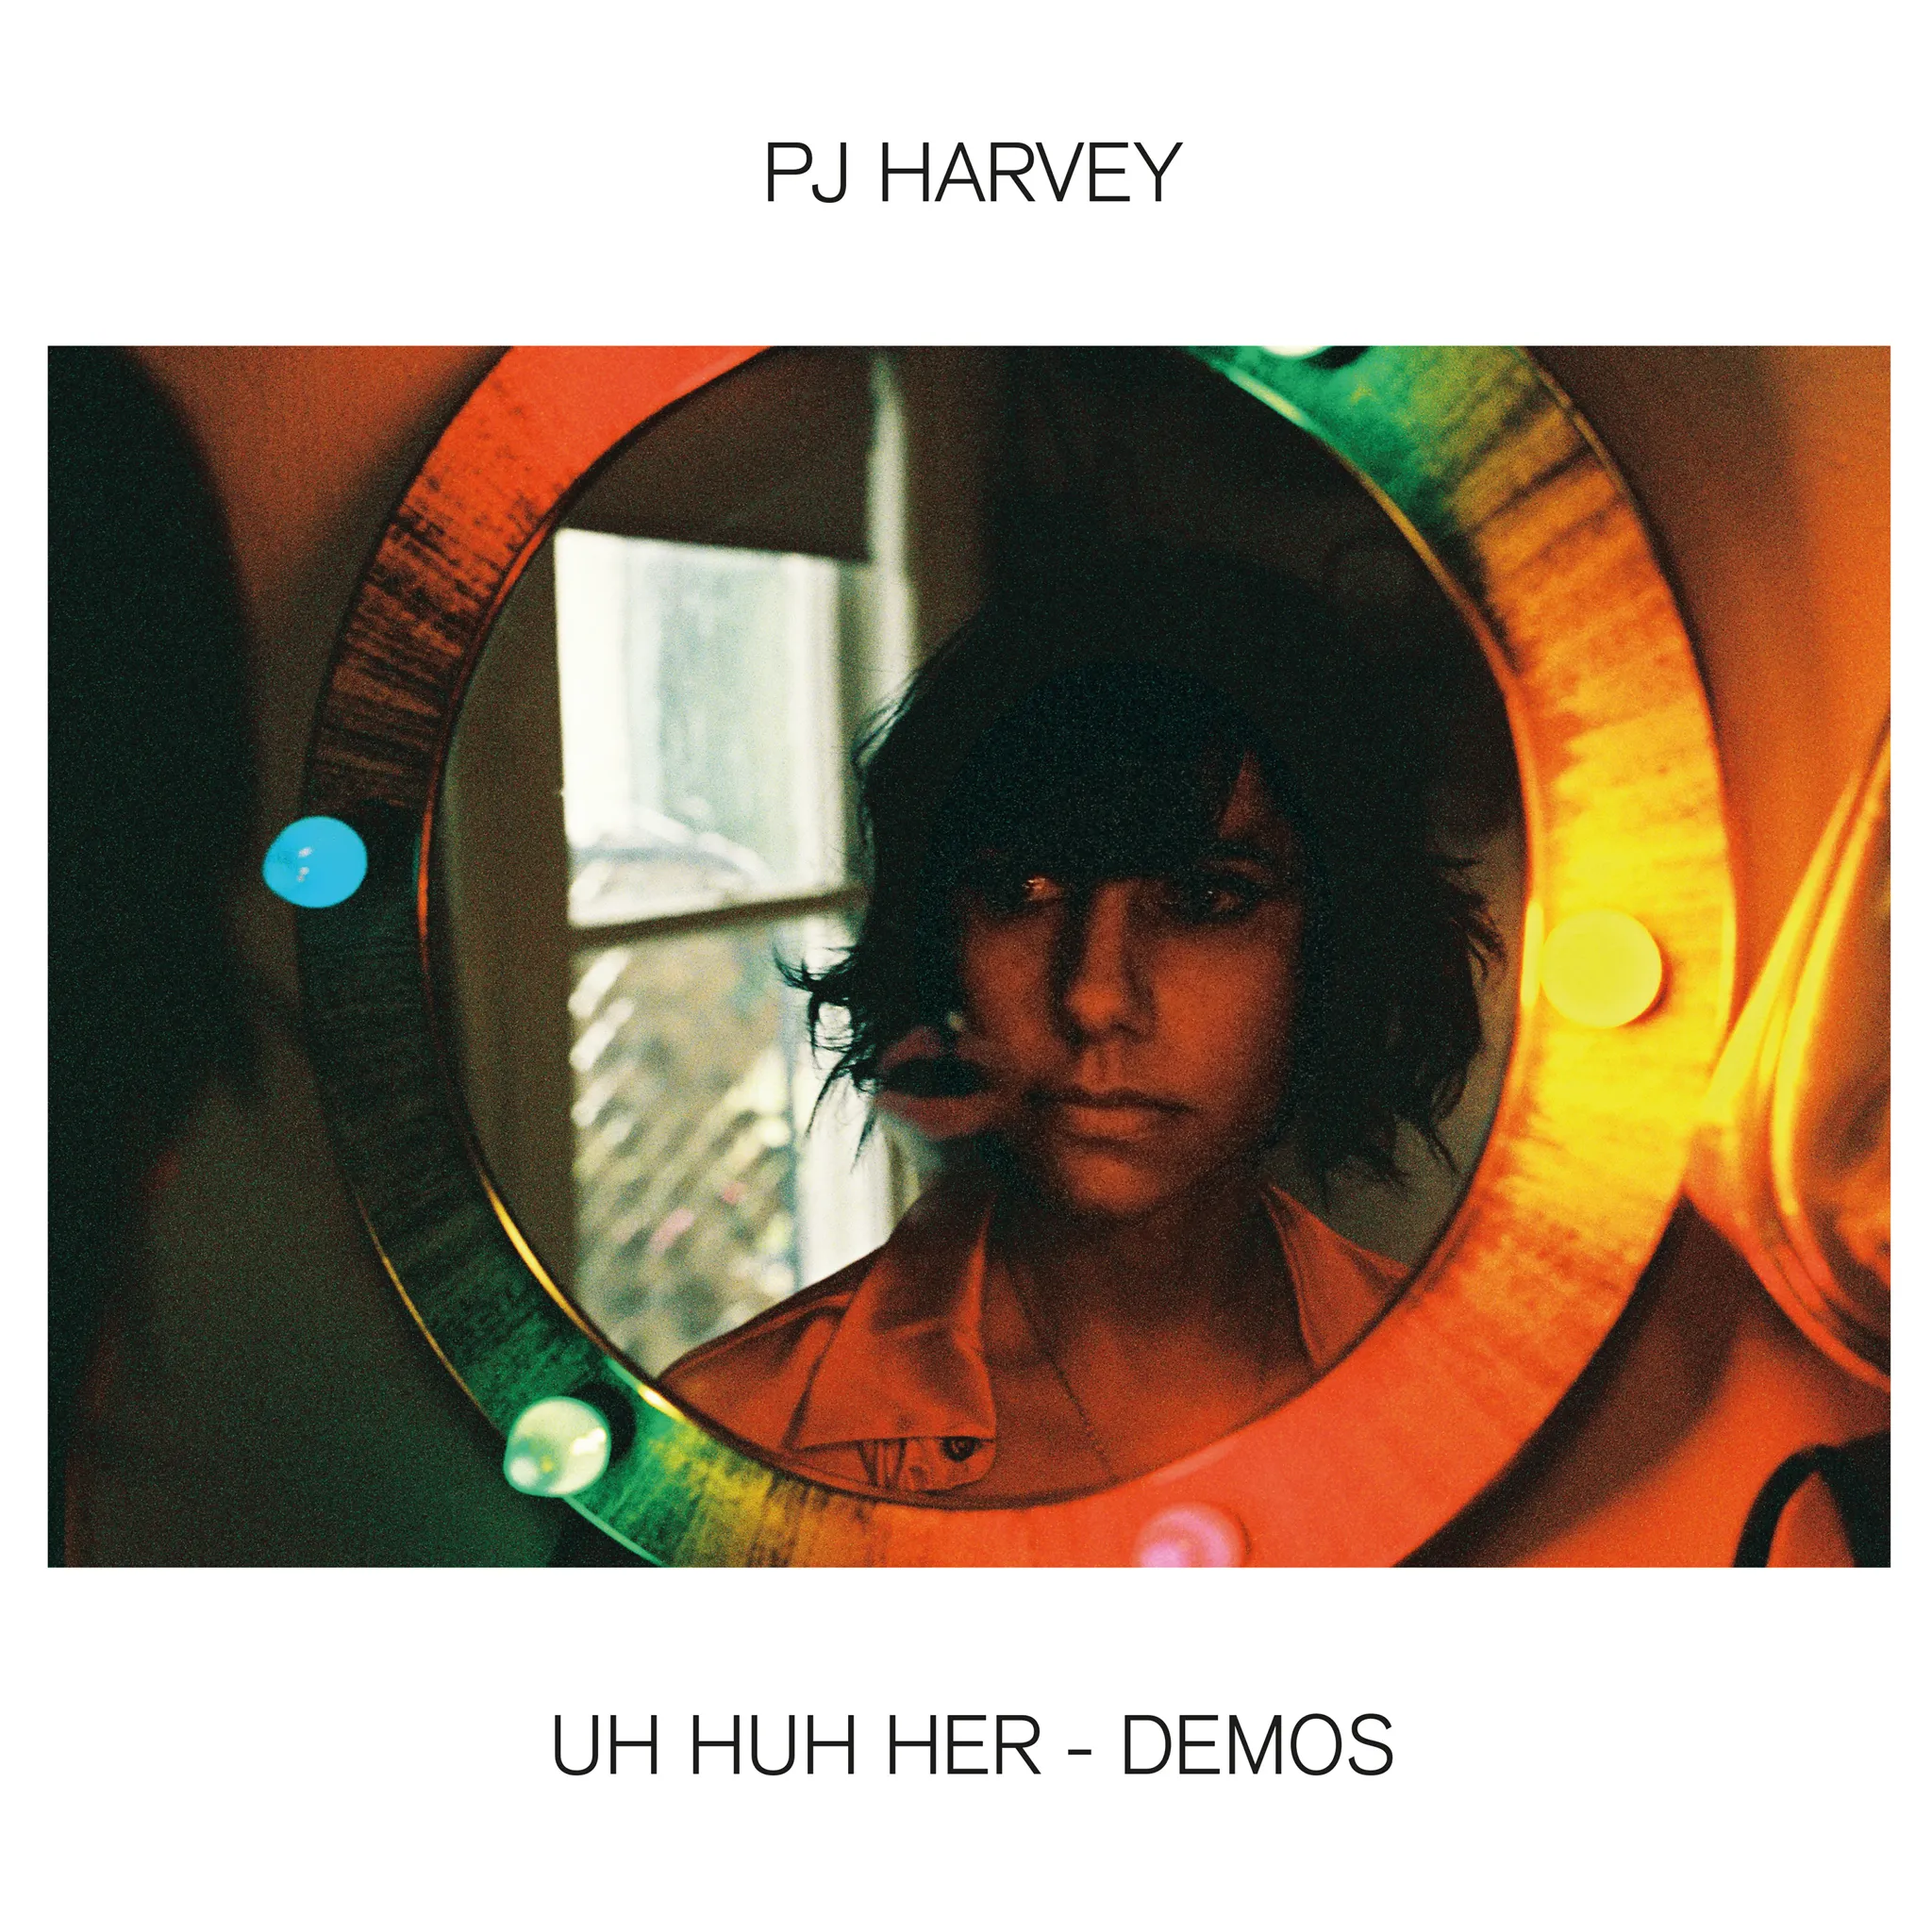 <strong>PJ Harvey - Uh Huh Her - Demos</strong> (Vinyl LP - black)